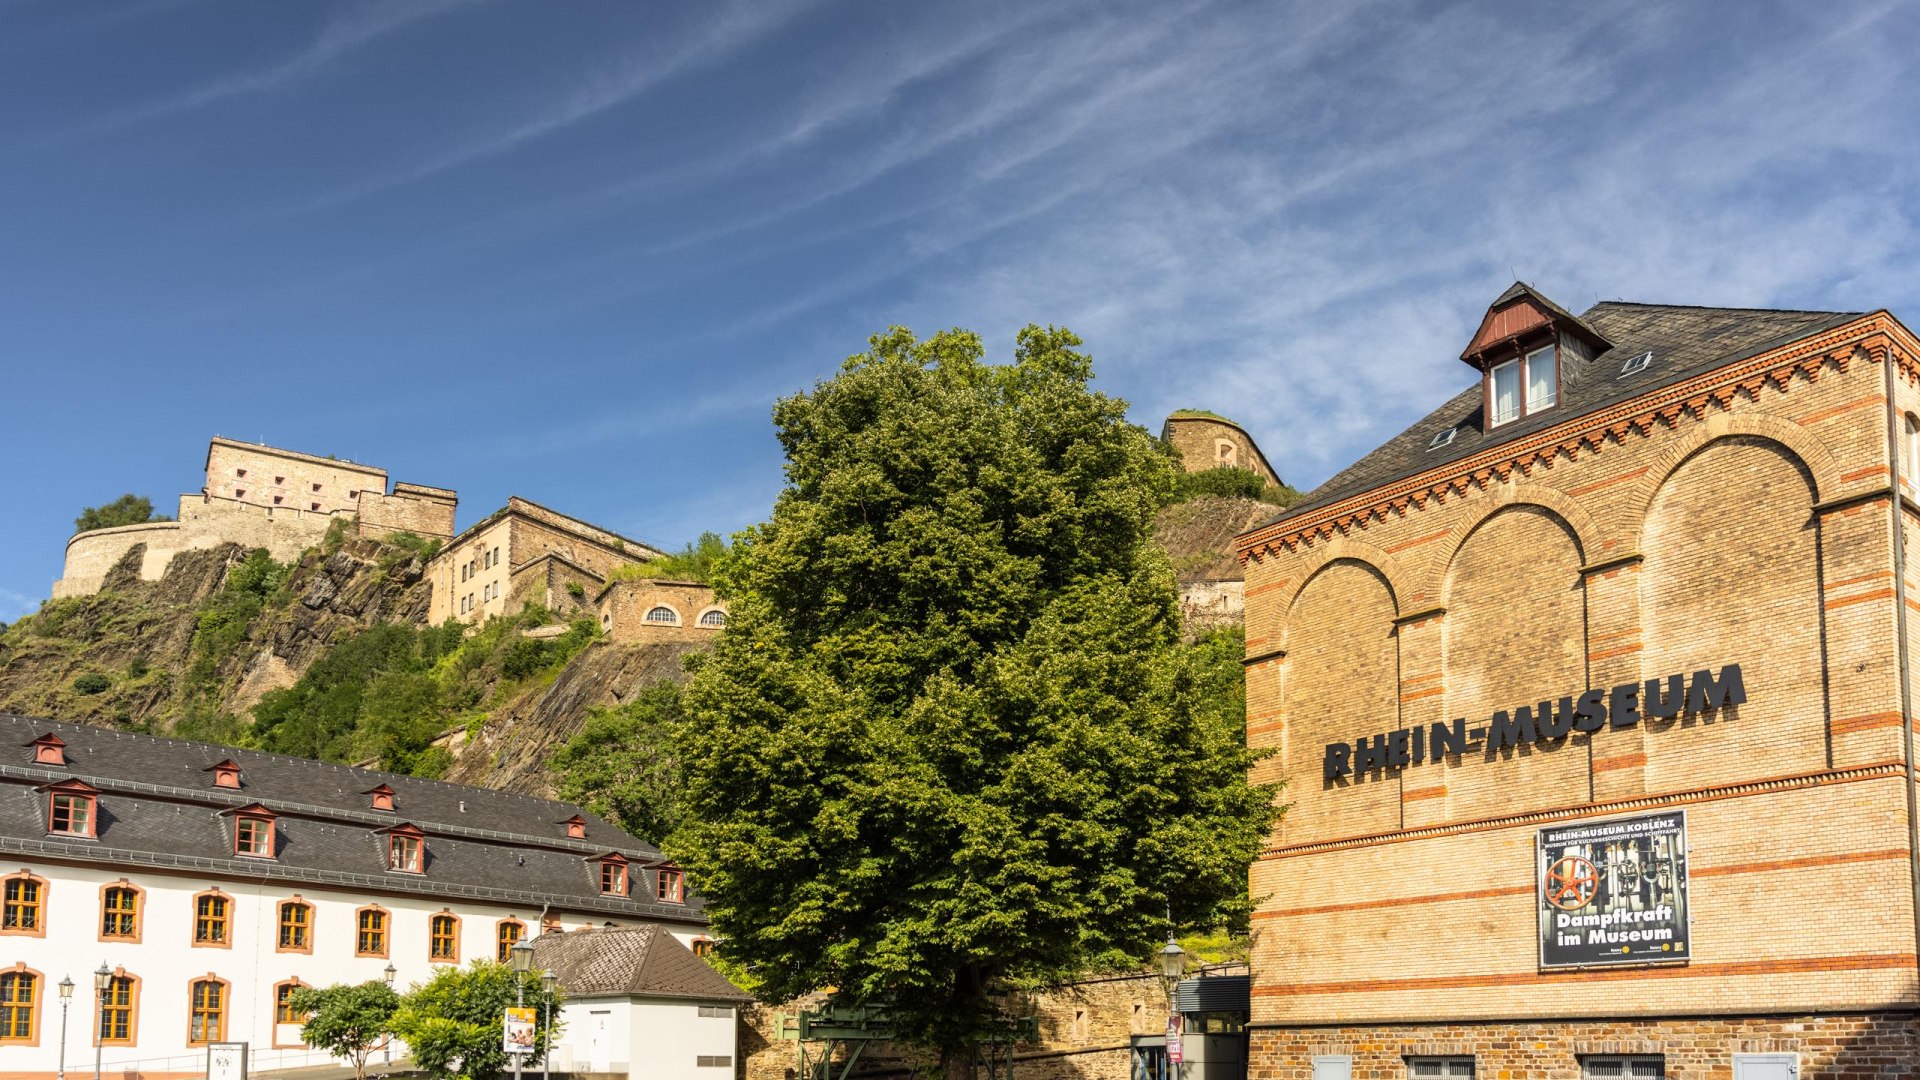 Rhein Museum | © Koblenz-Touristik GmbH / Dominik Ketz